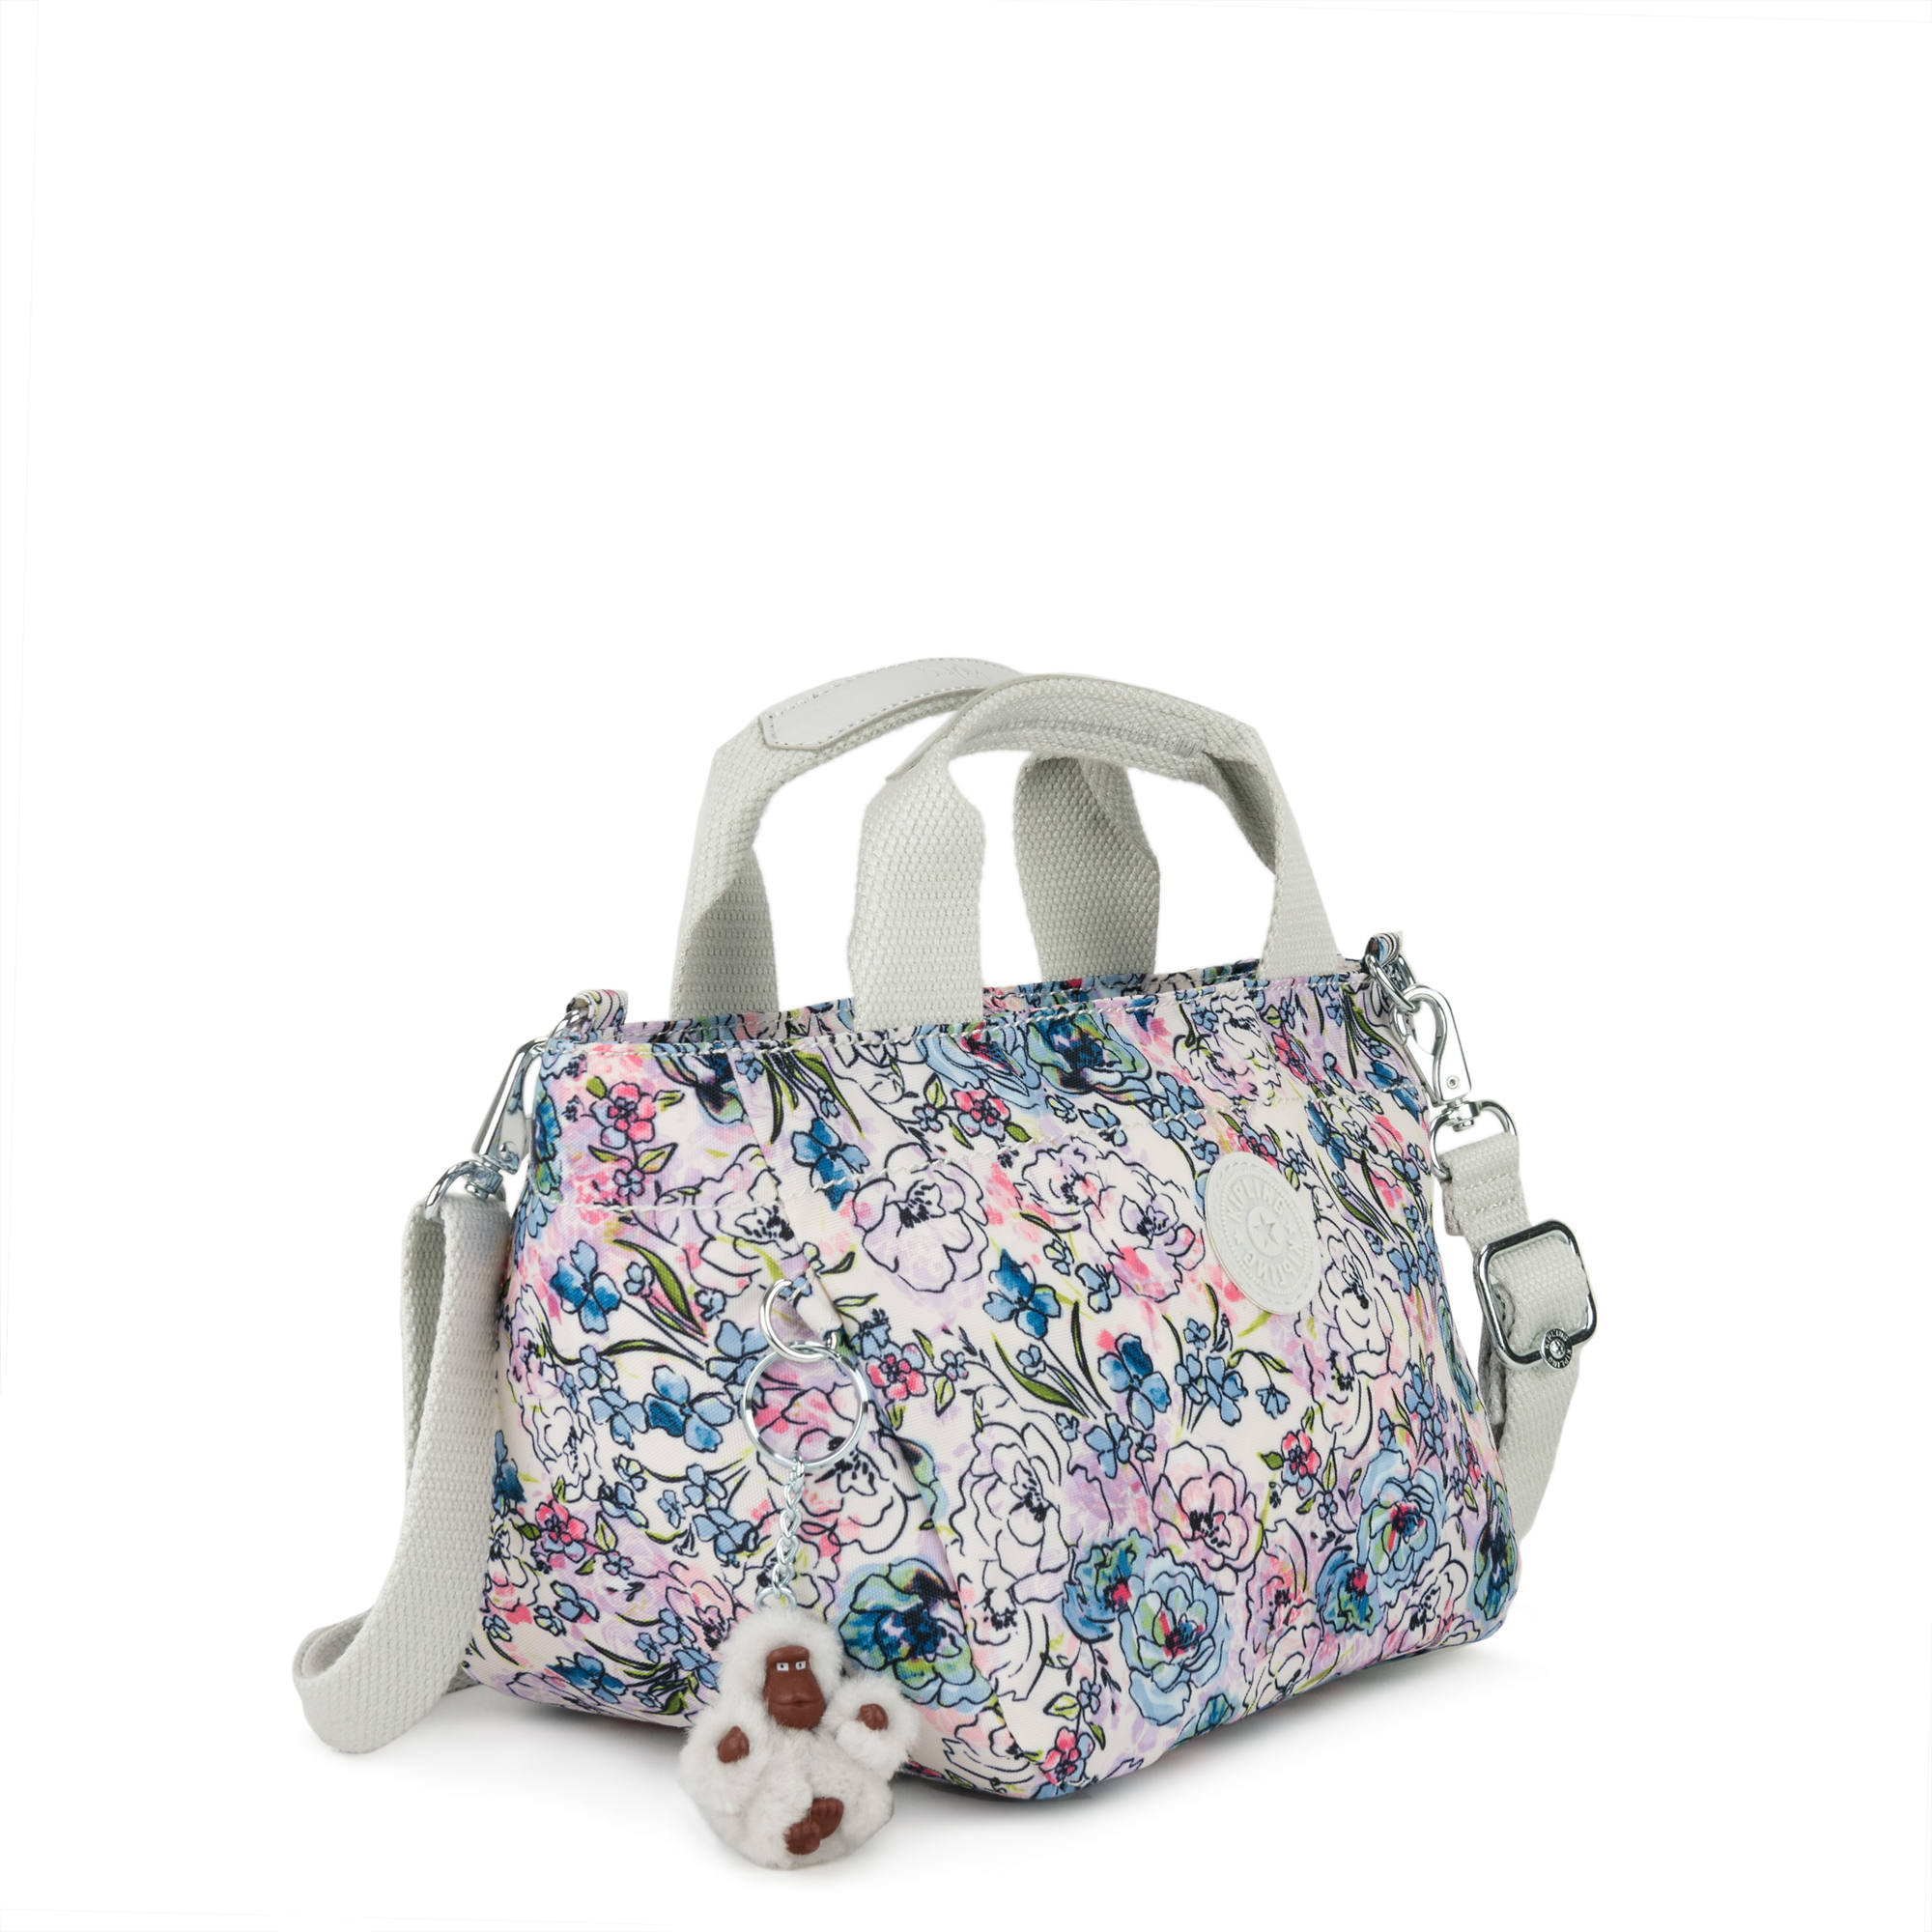 Kipling Sugar S Ii Mini Bag | eBay